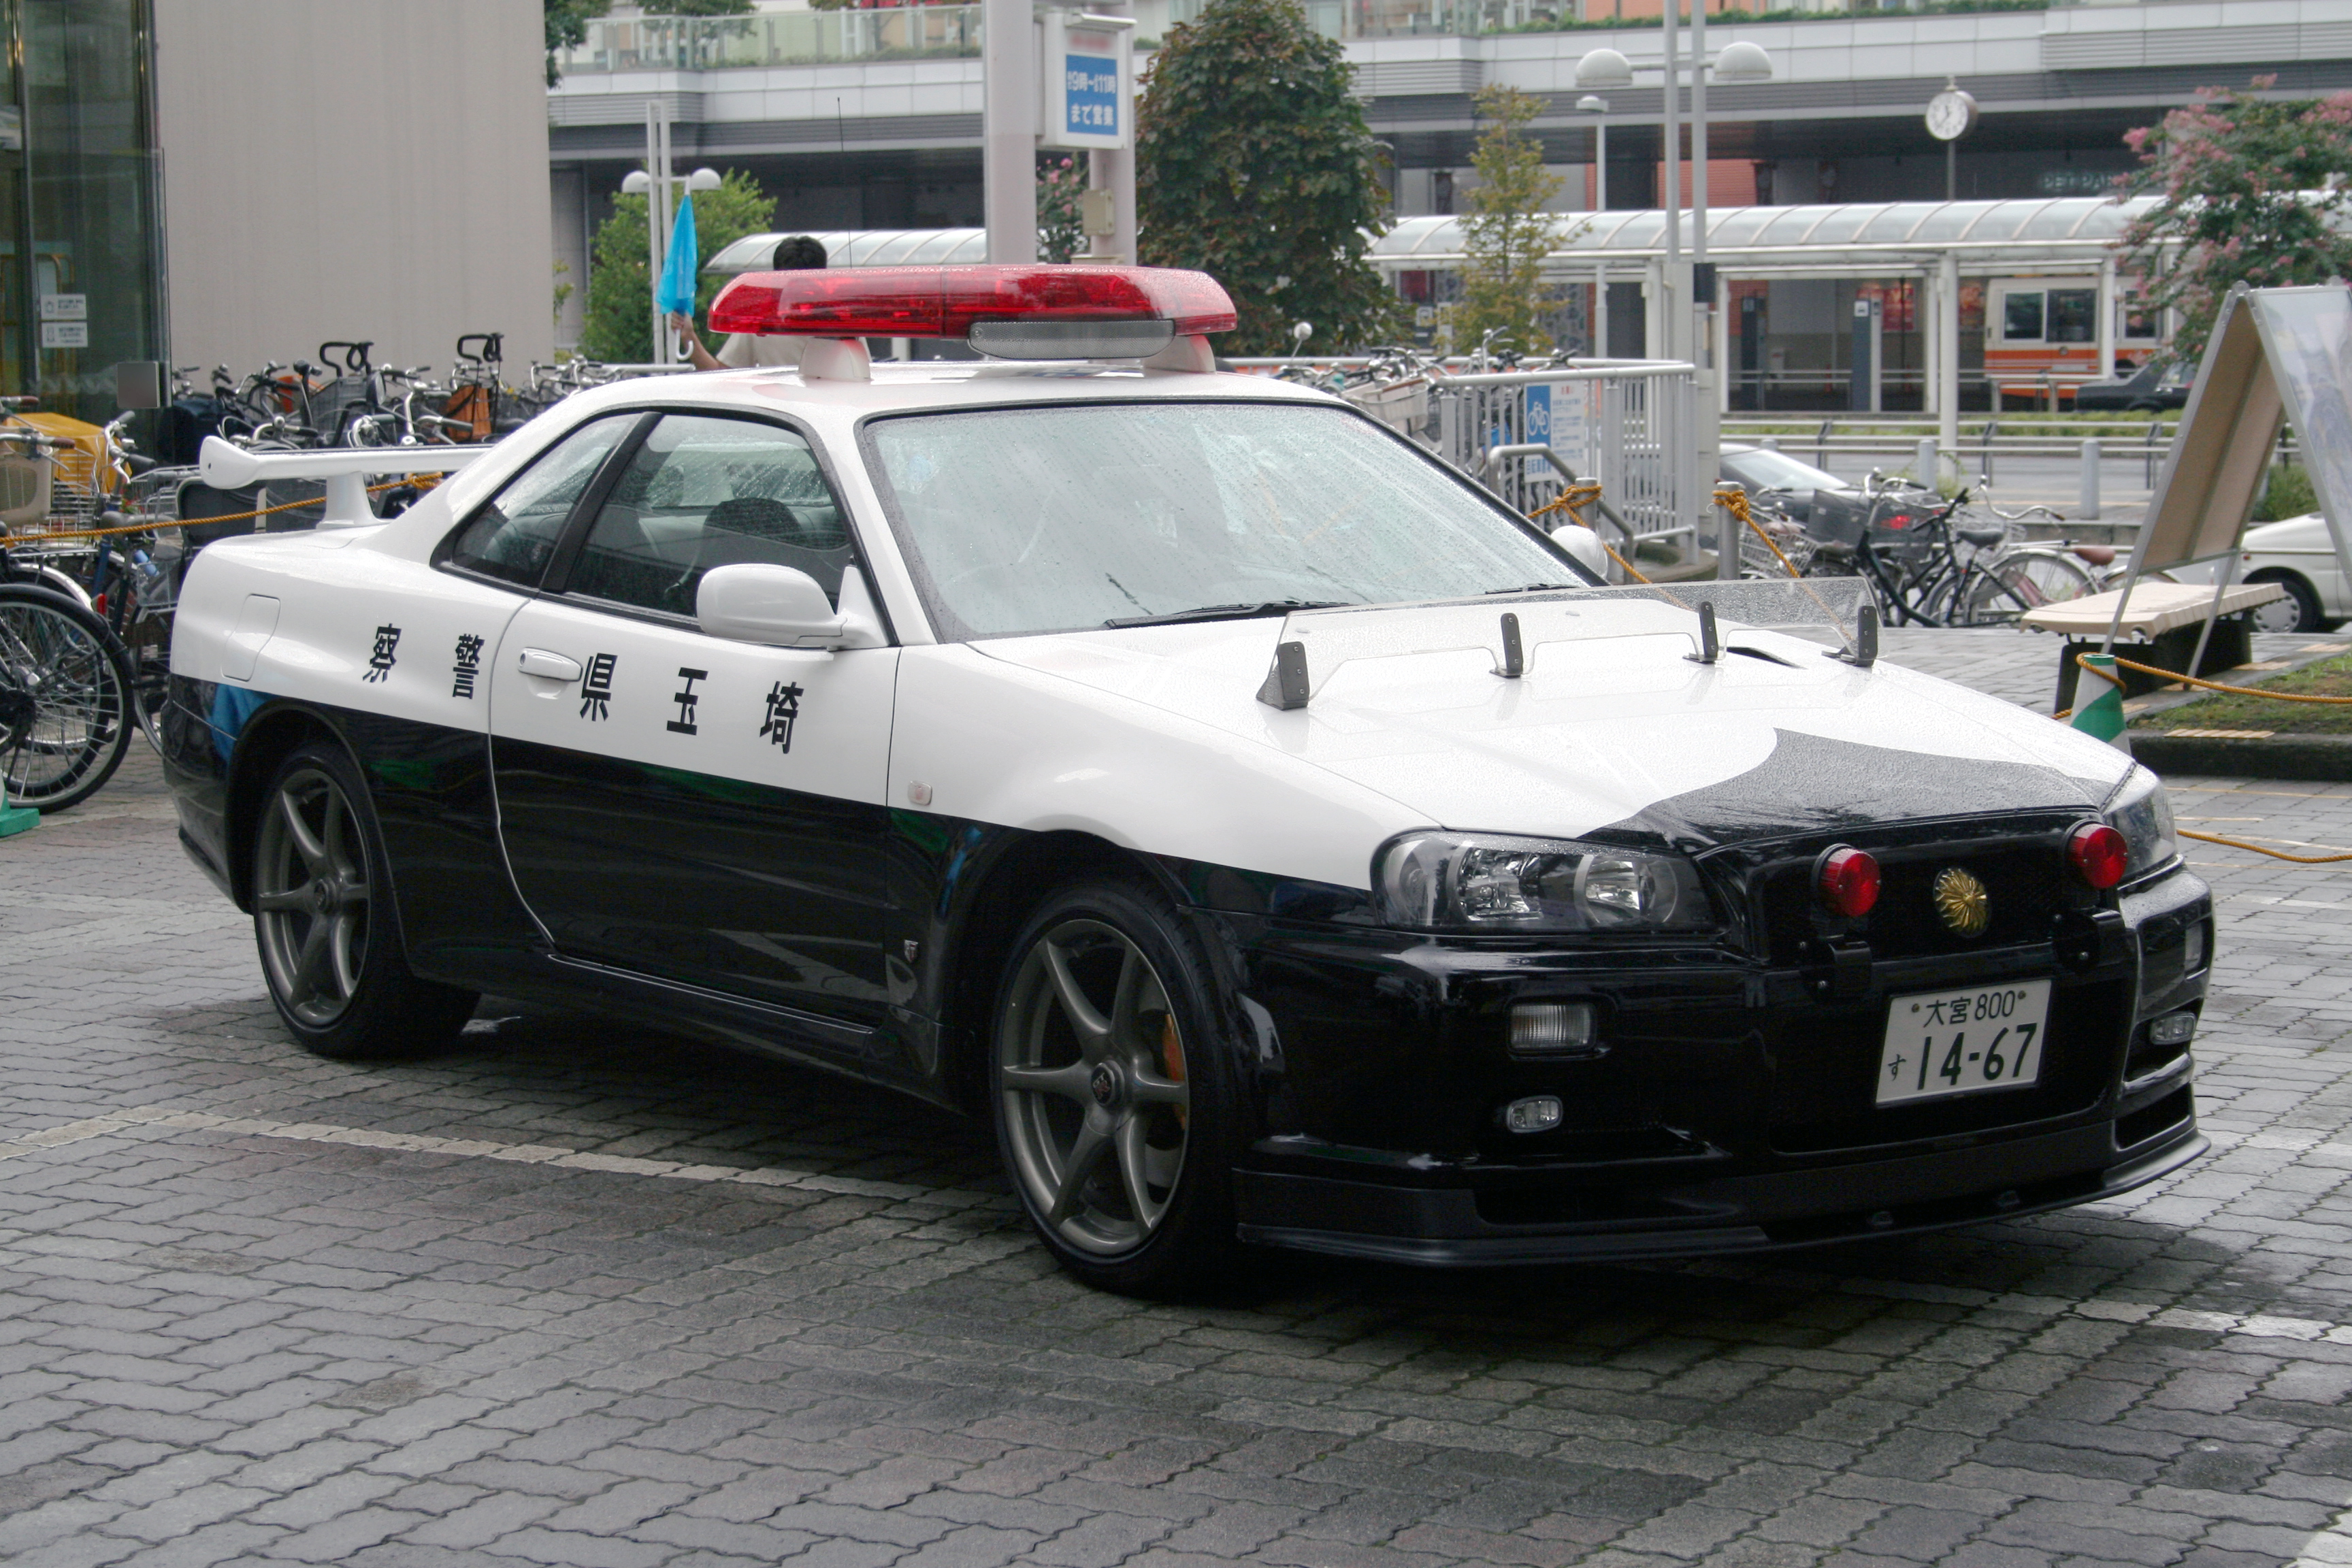 File:Japanese NISSAN SkylineR34 GTR police car.jpg - Wikipedia, the ...